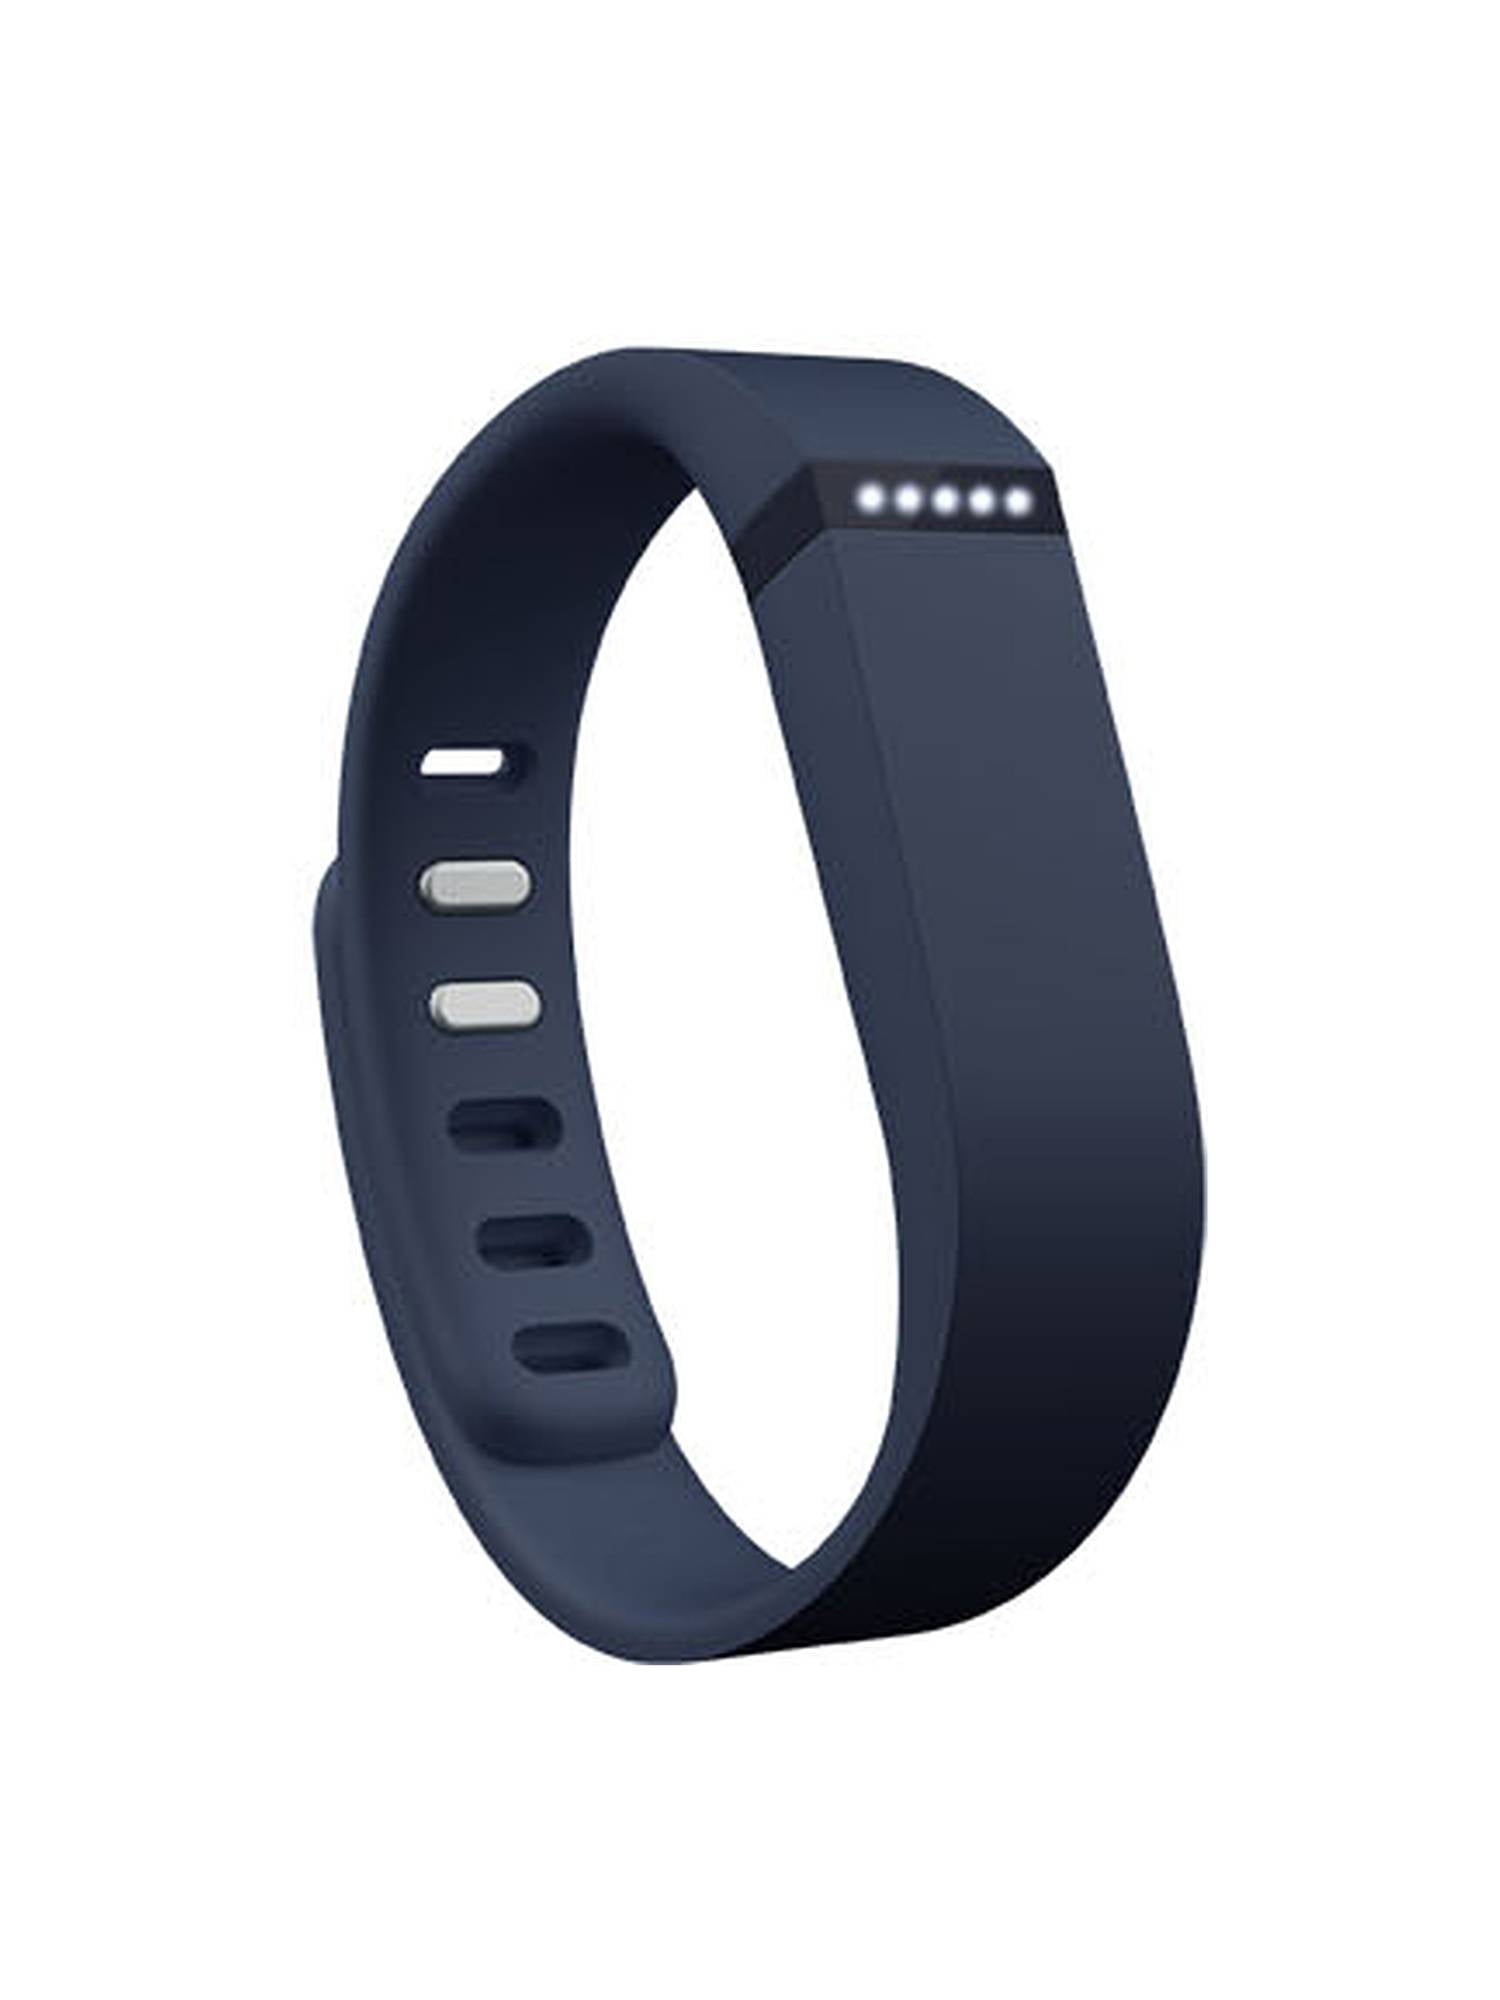 Fitbit Flex Wireless Activity & Sleep Tracker Monitor Fitness Wristband ...